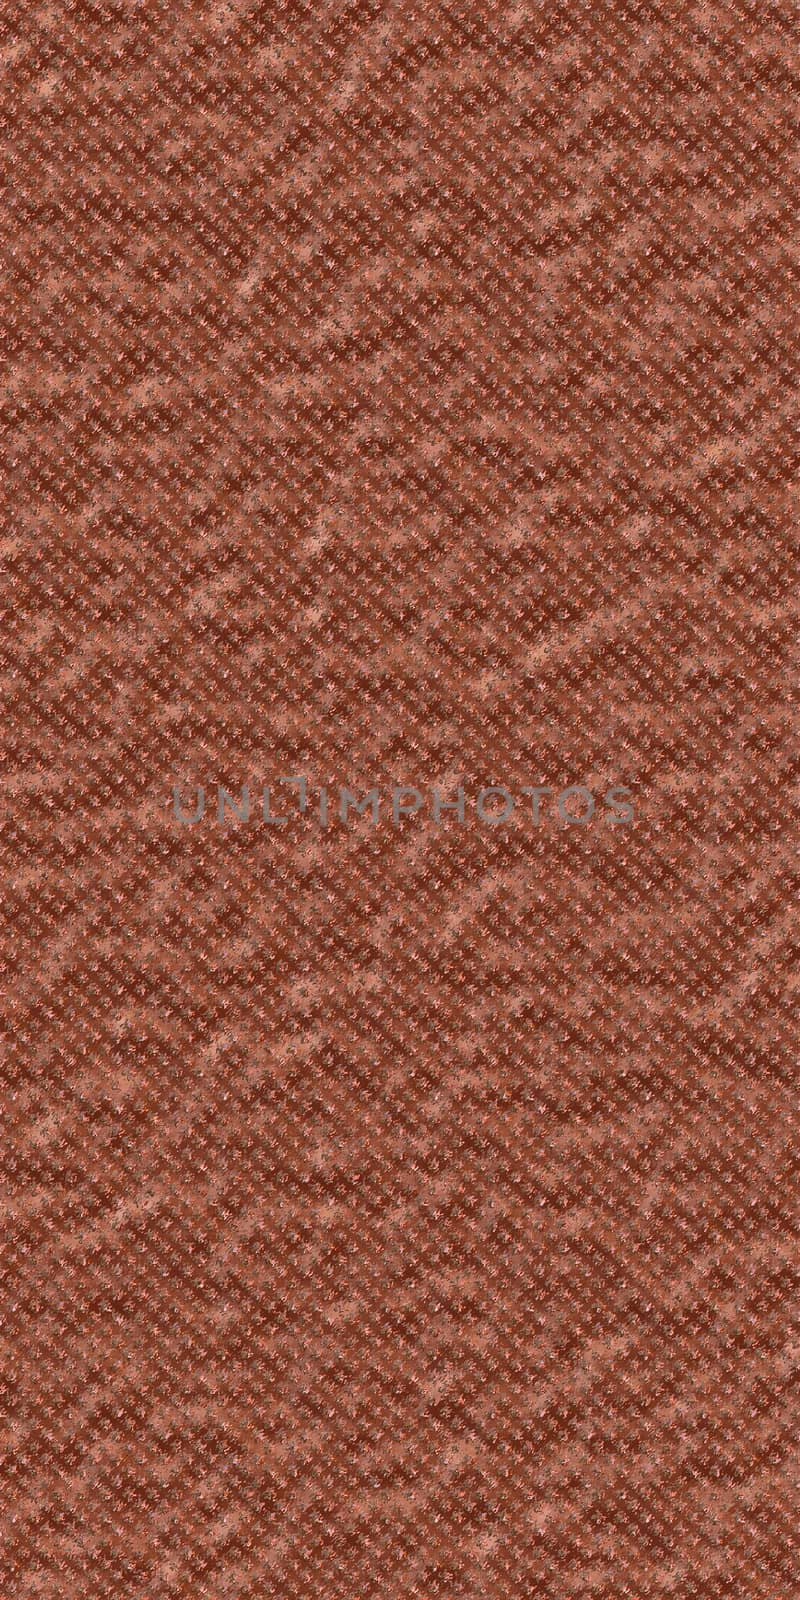 Liquid metal blot on brown background